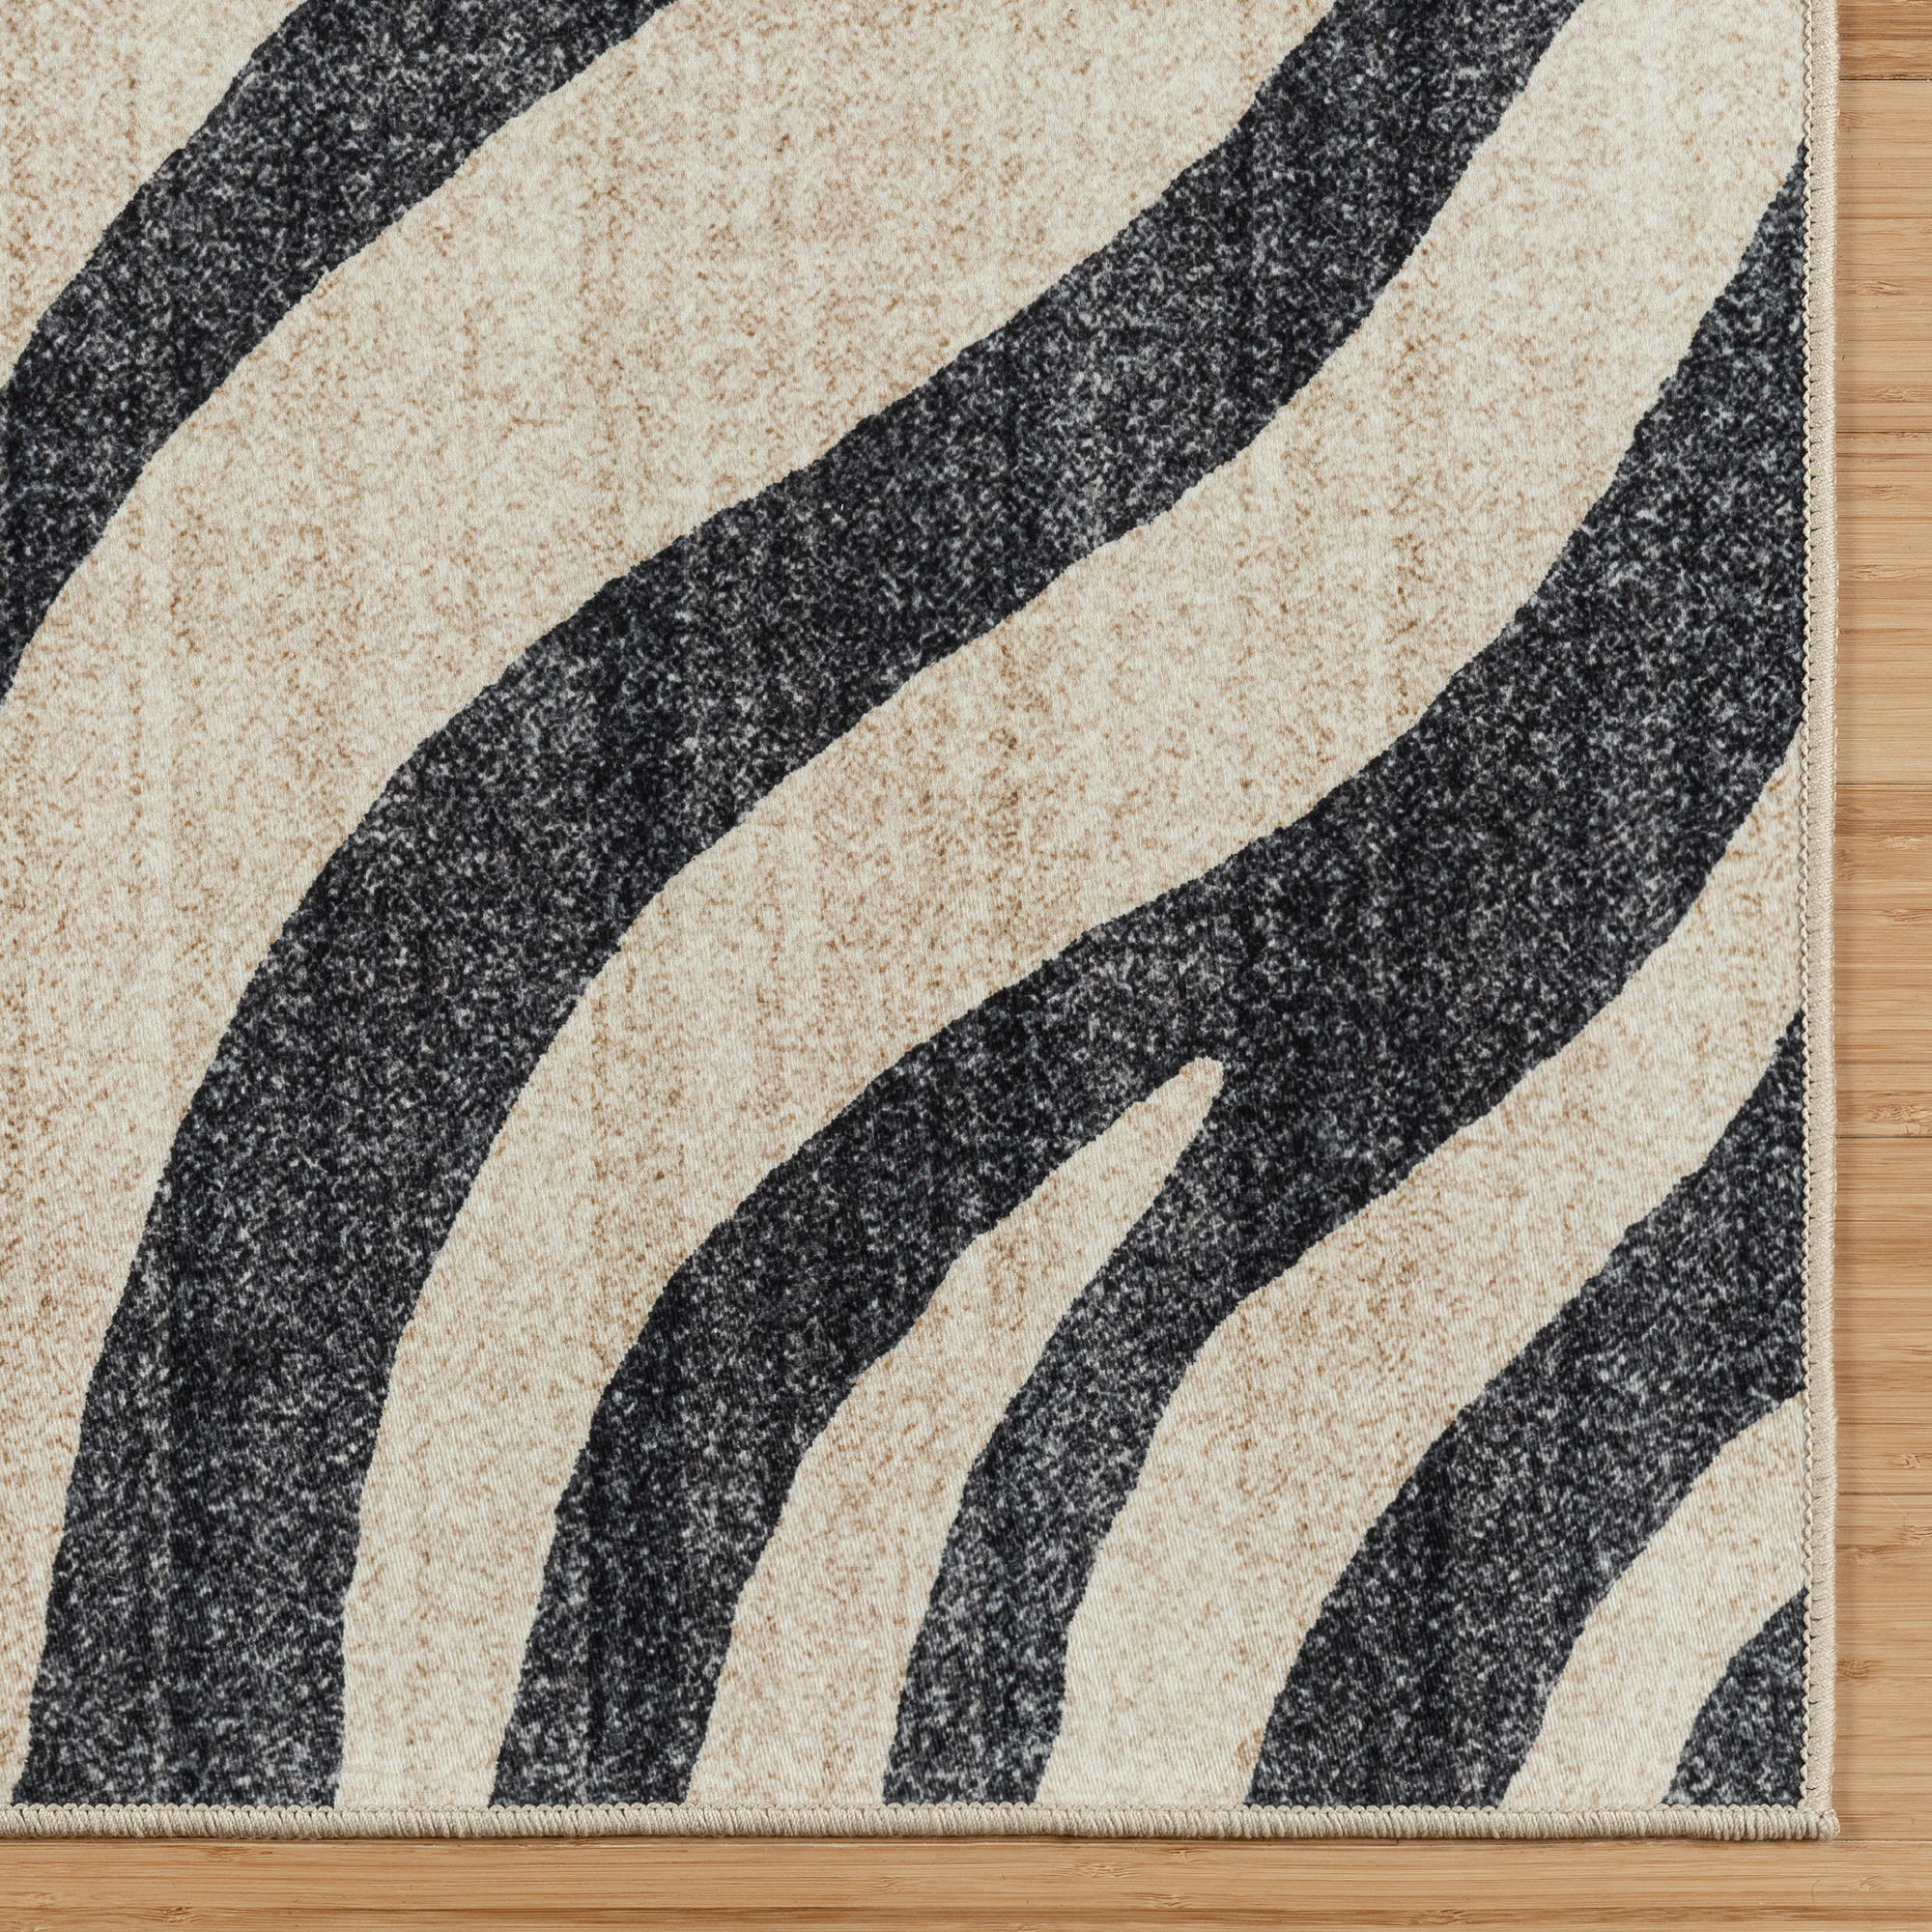 Crystal Print Zebra Washable Modern Striped Black White Rectangular Indoor Area Rug by Gertmenian, 8x10 - image 4 of 6